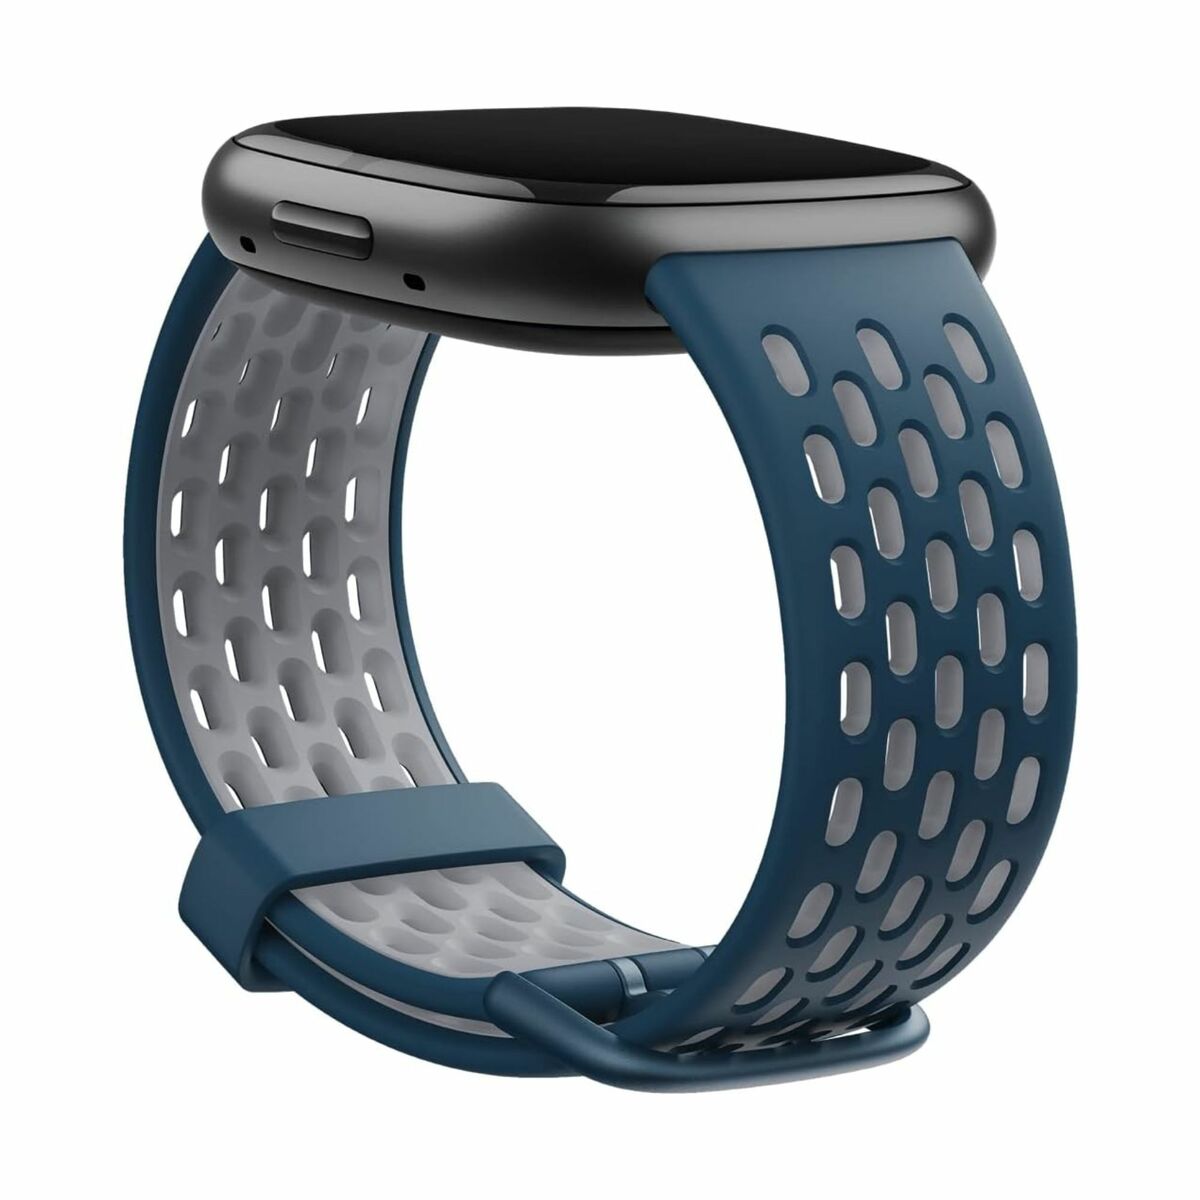 Kaufe Smartwatch Fitbit Blau bei AWK Flagship um € 48.00